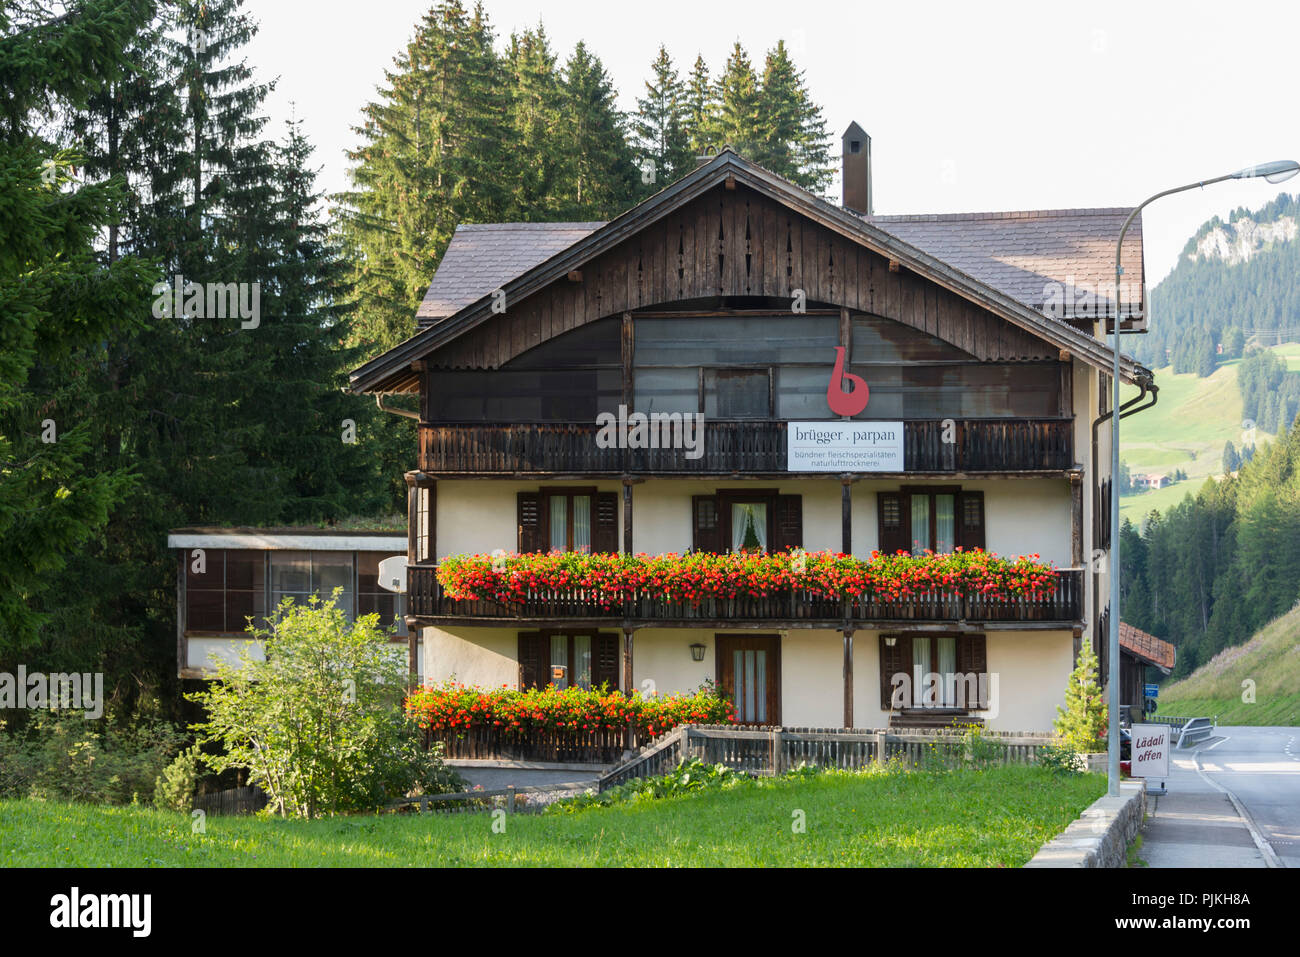 House of Brügger Bündner Fleisch meat drying plant, Parpan, municipality of Churwalden, canton of Grisons, Switzerland Stock Photo